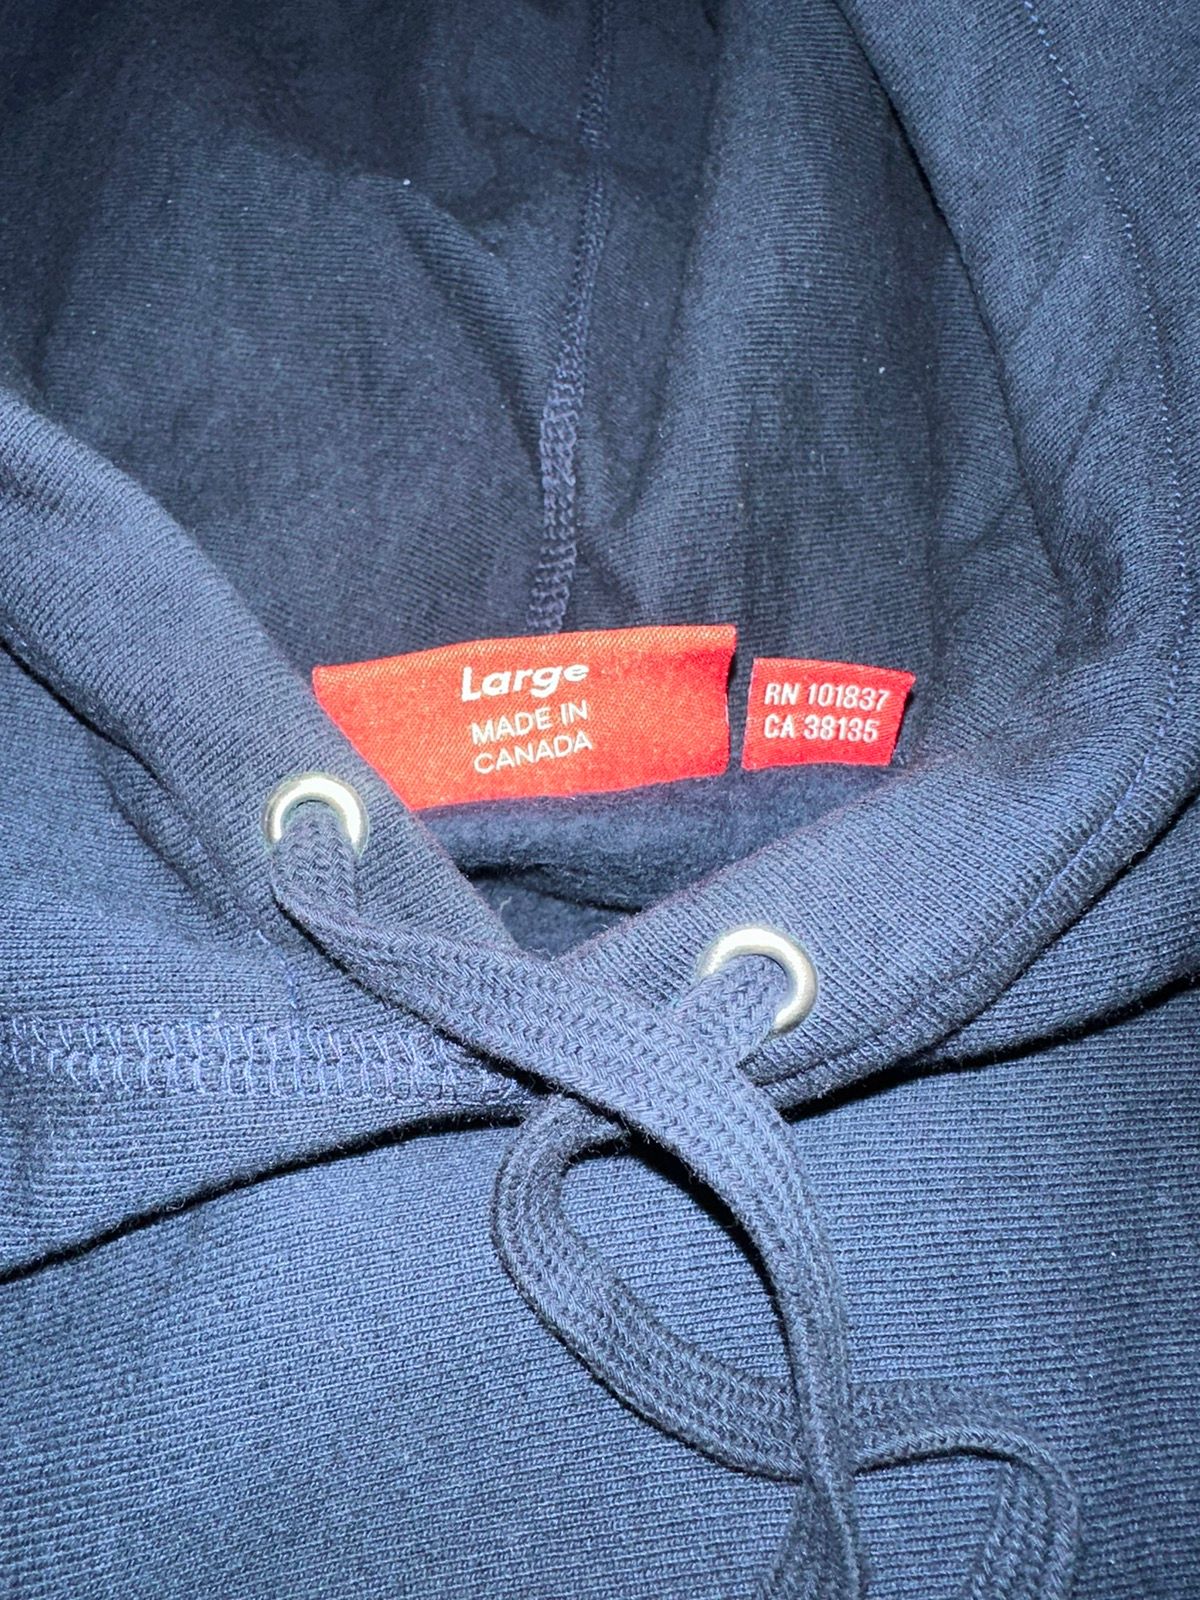 Supreme Supreme Bandana Box Logo Hooded Sweatshirt Navy Blue Large Size US L / EU 52-54 / 3 - 6 Thumbnail